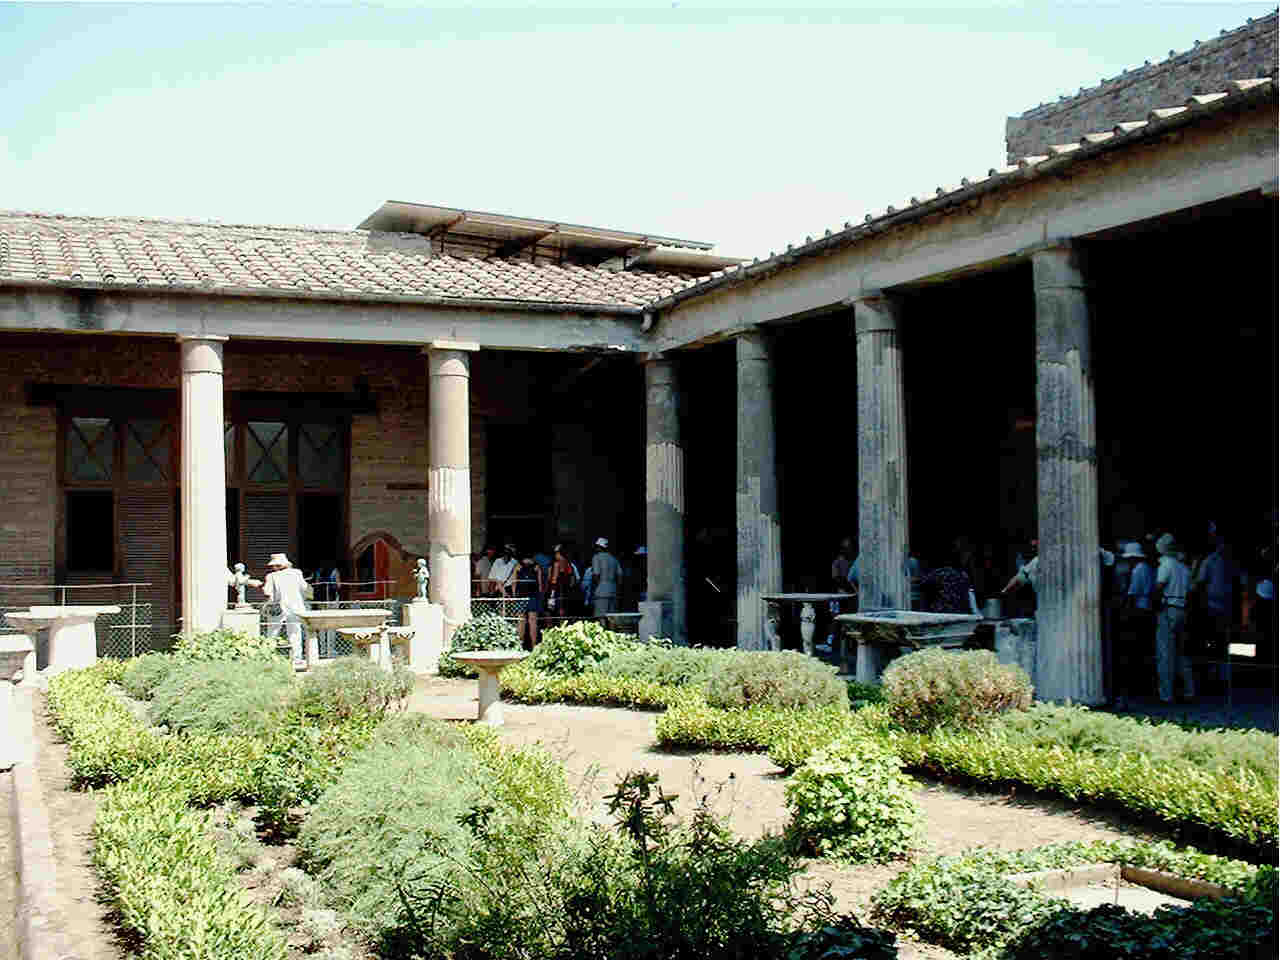 House of Vetti, Pompeii